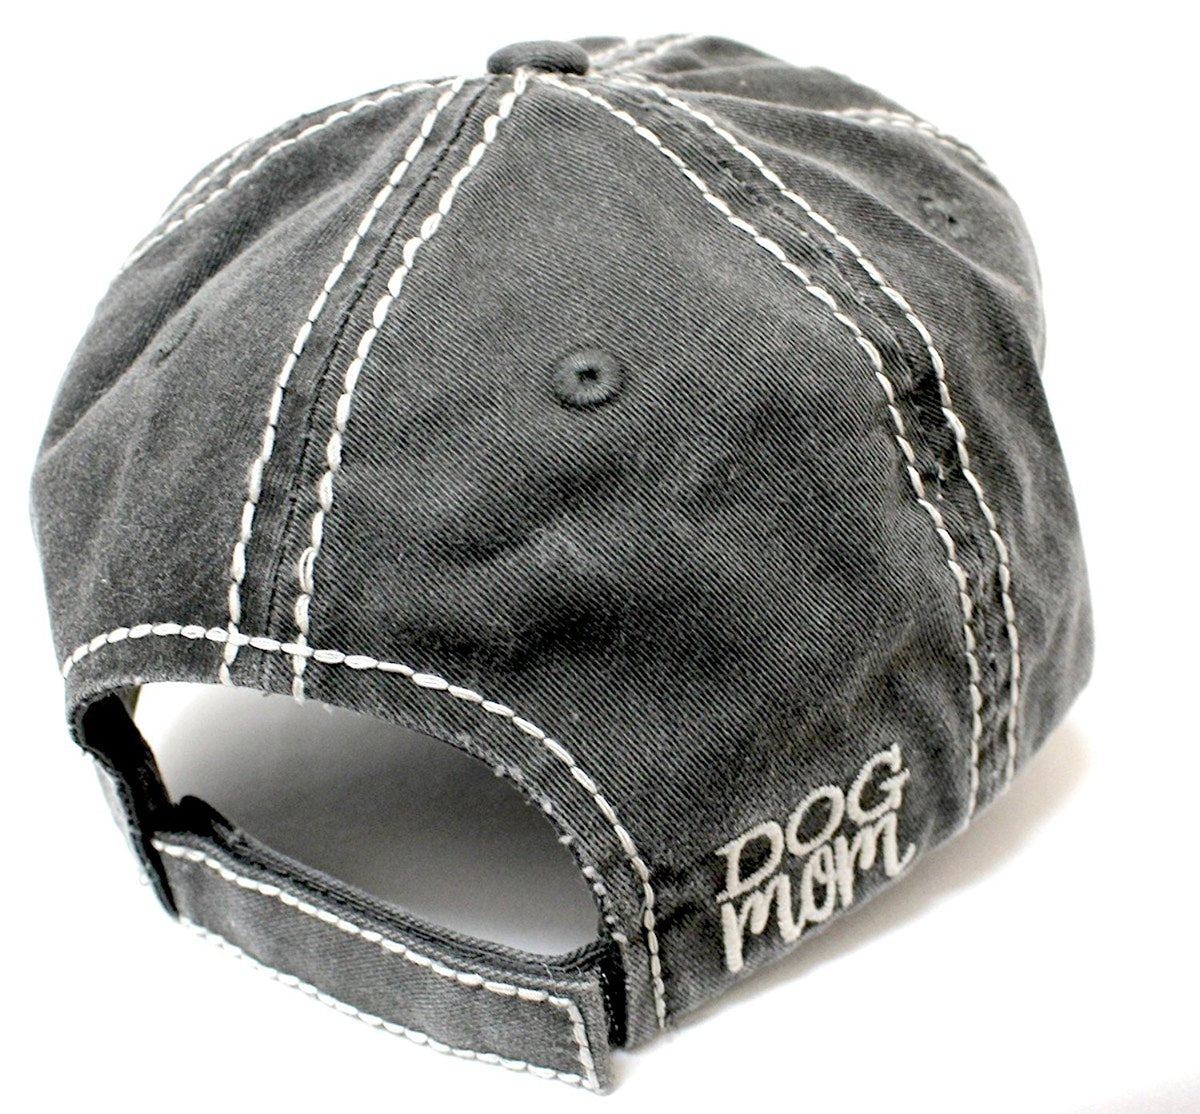 CAPS 'N VINTAGE Vintage Black Dog MOM Patch Embroidery Baseball Hat - Caps 'N Vintage 